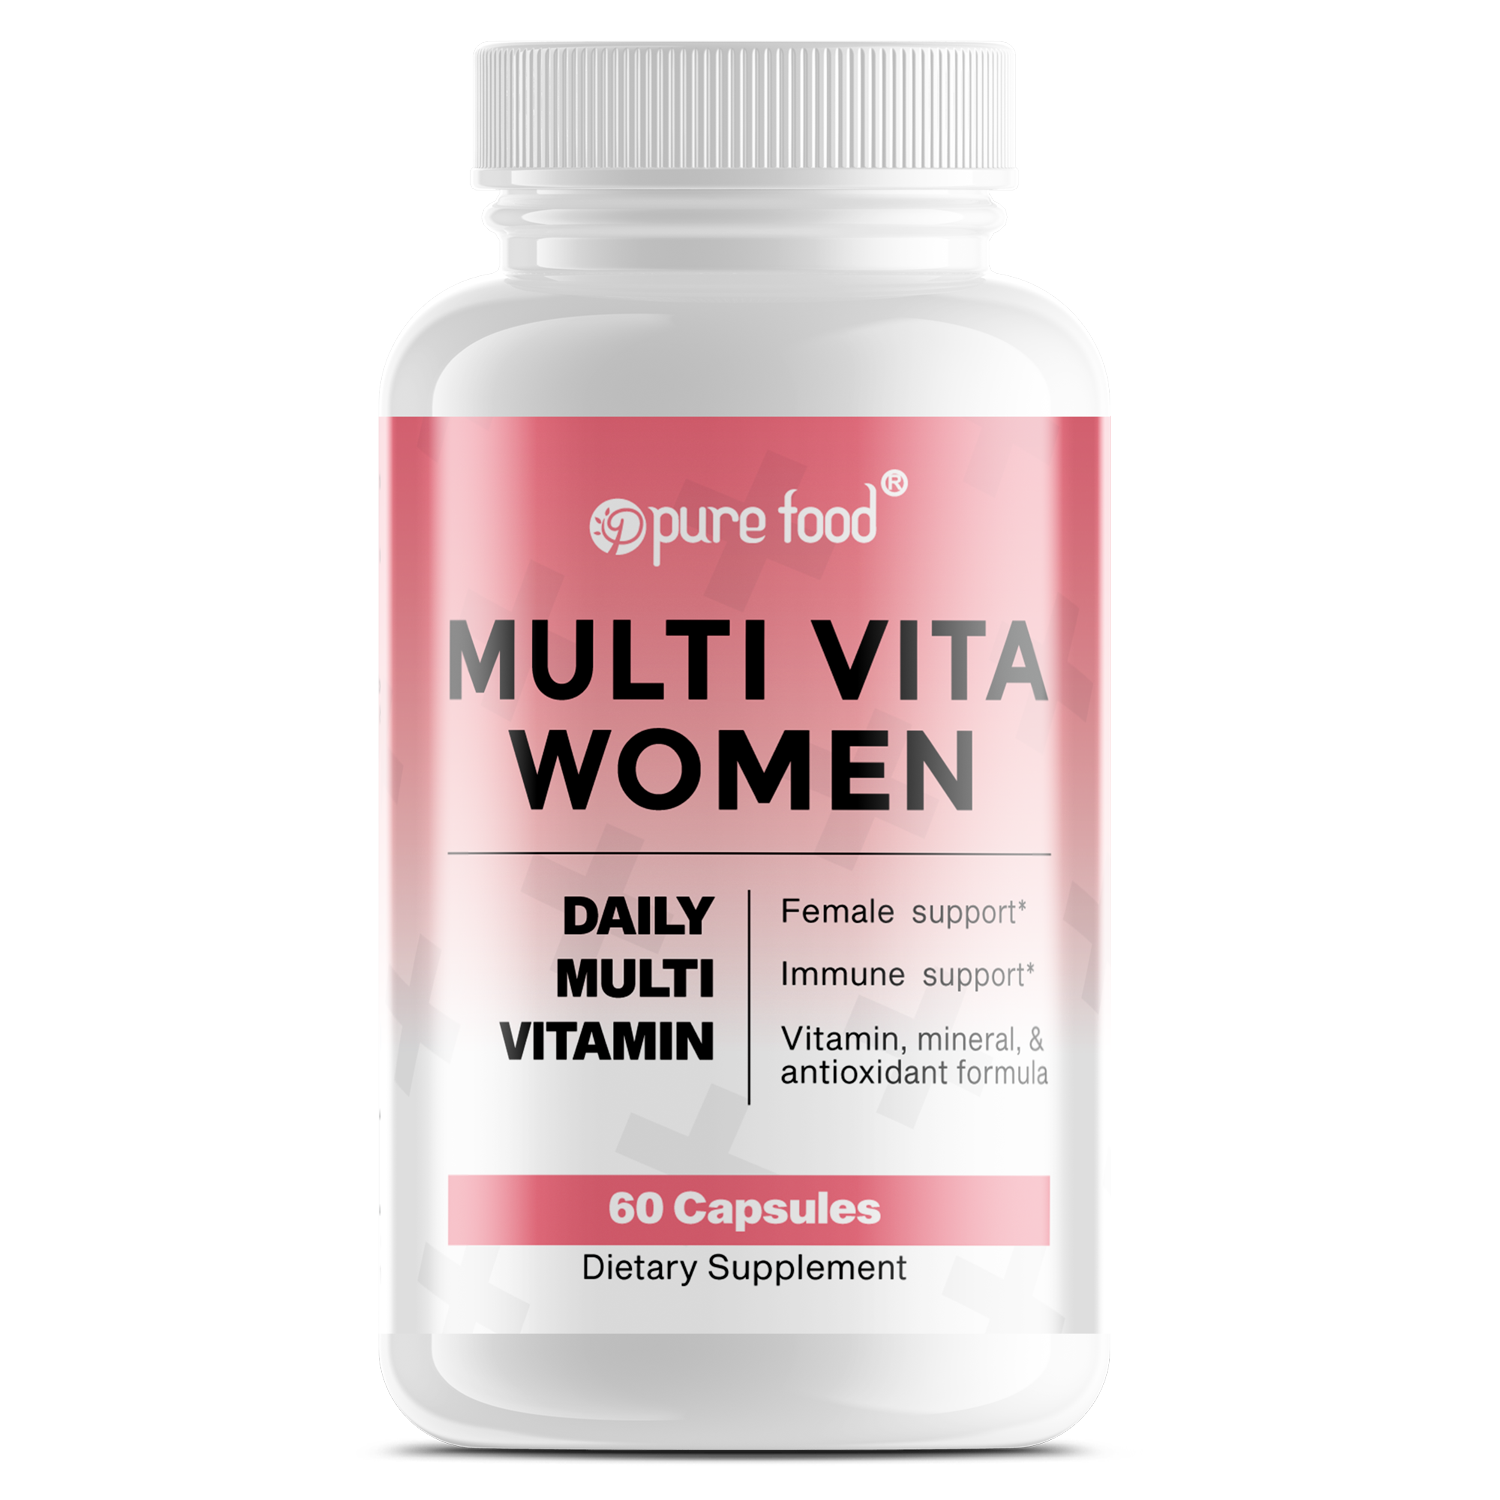 VITA WOMEN - Daily Multivitamin for Women - 60 Capsules